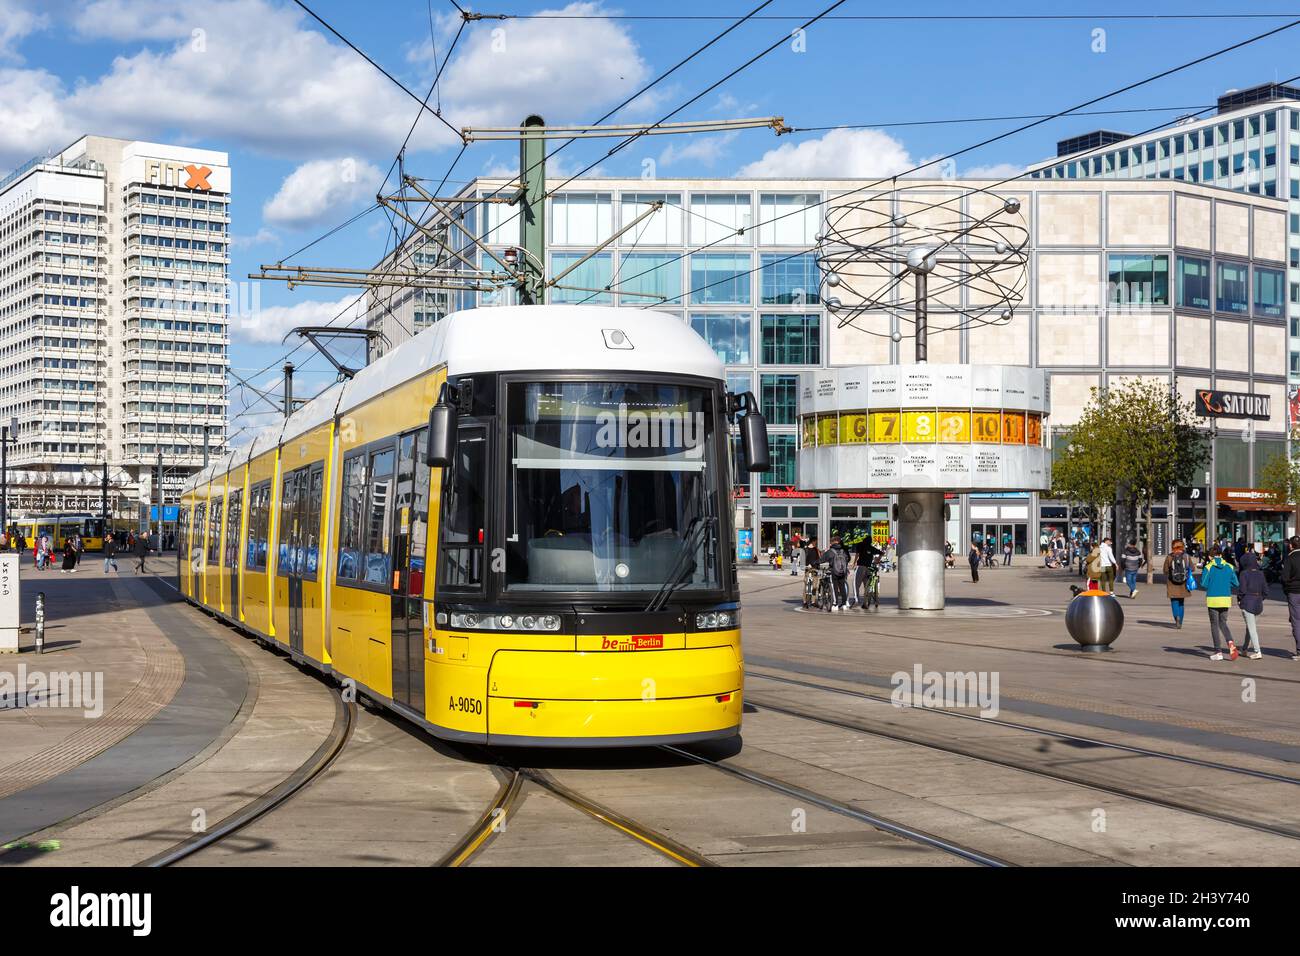 Tram Berlin Tram Bombardier Flexity train local traffic at Alexanderplatz in Germany Stock Photo